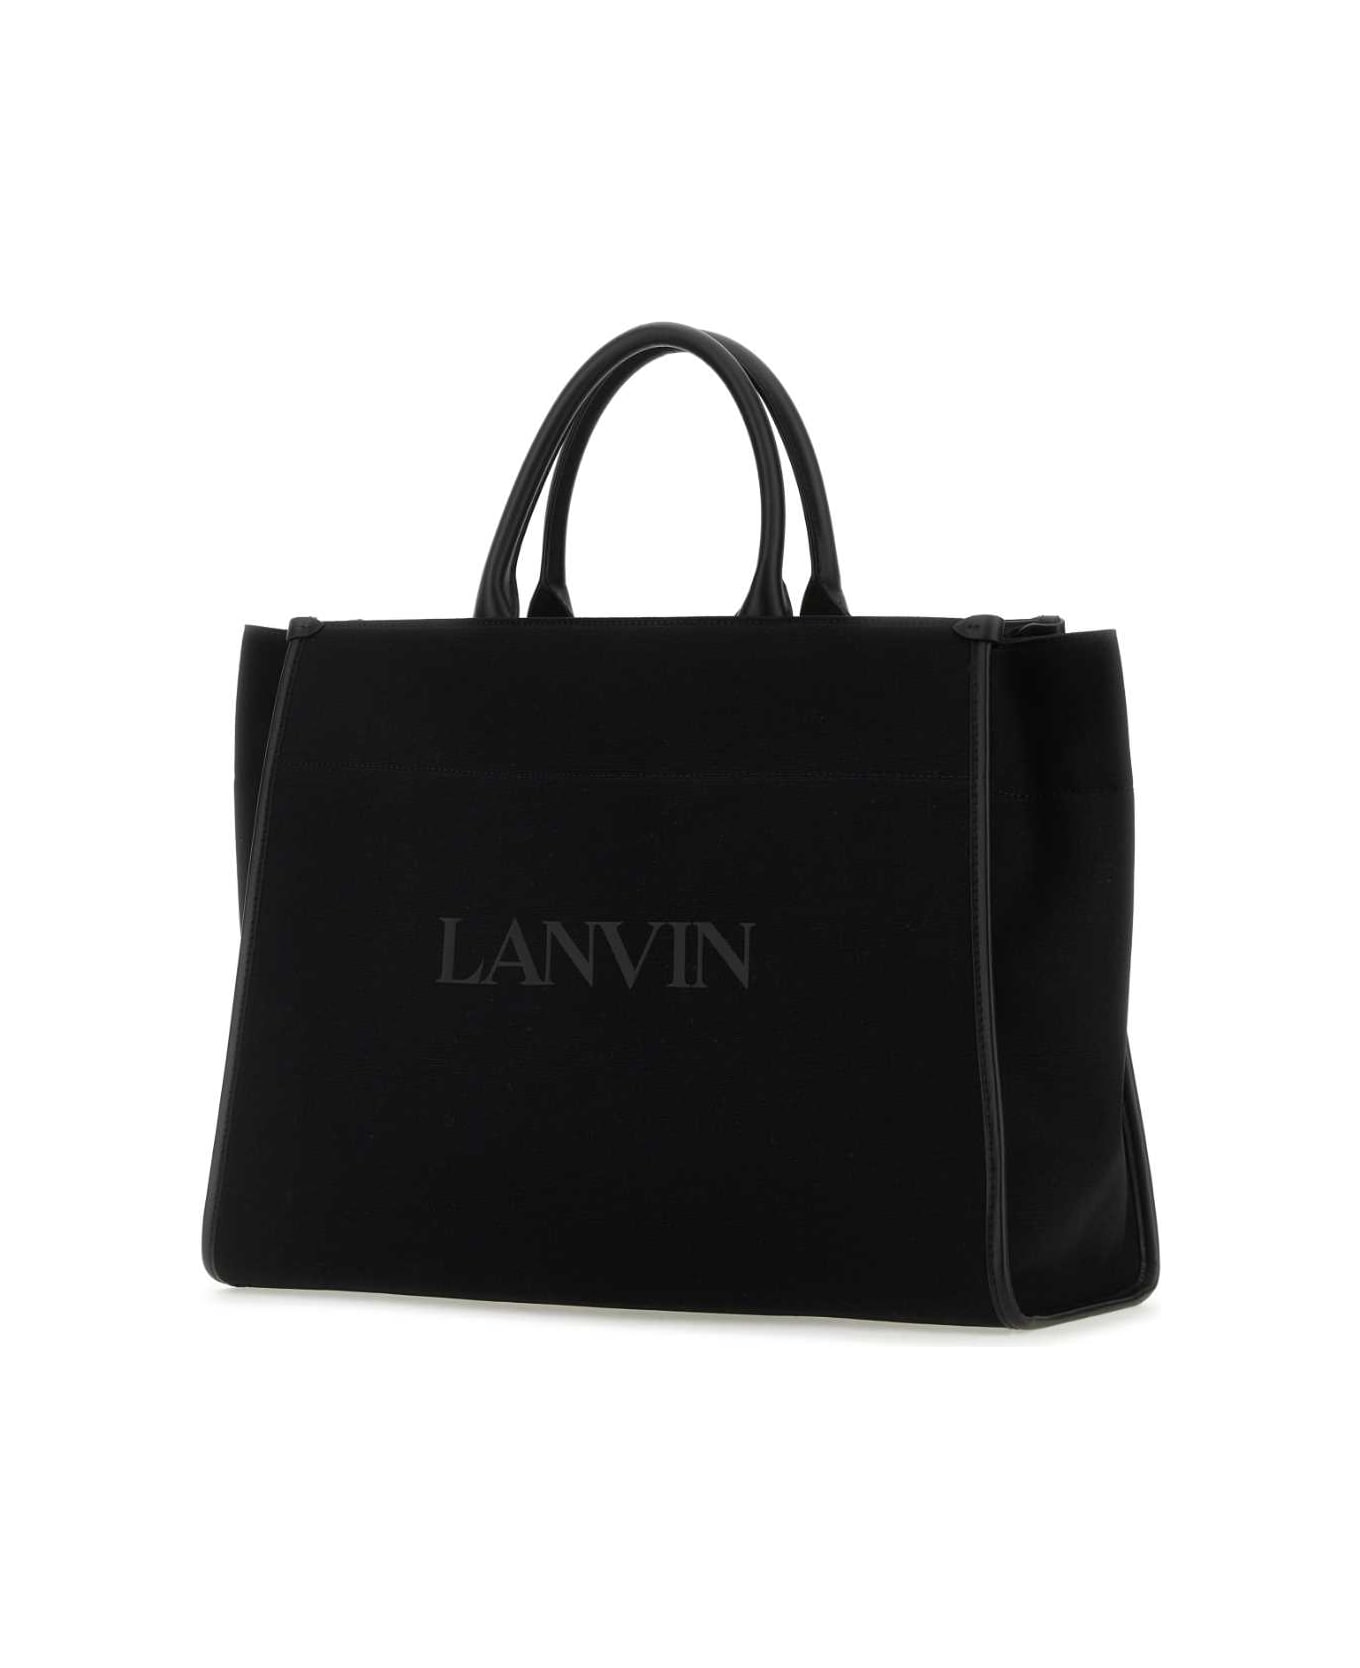 Lanvin Black Canvas Mm Shopping Bag - Black